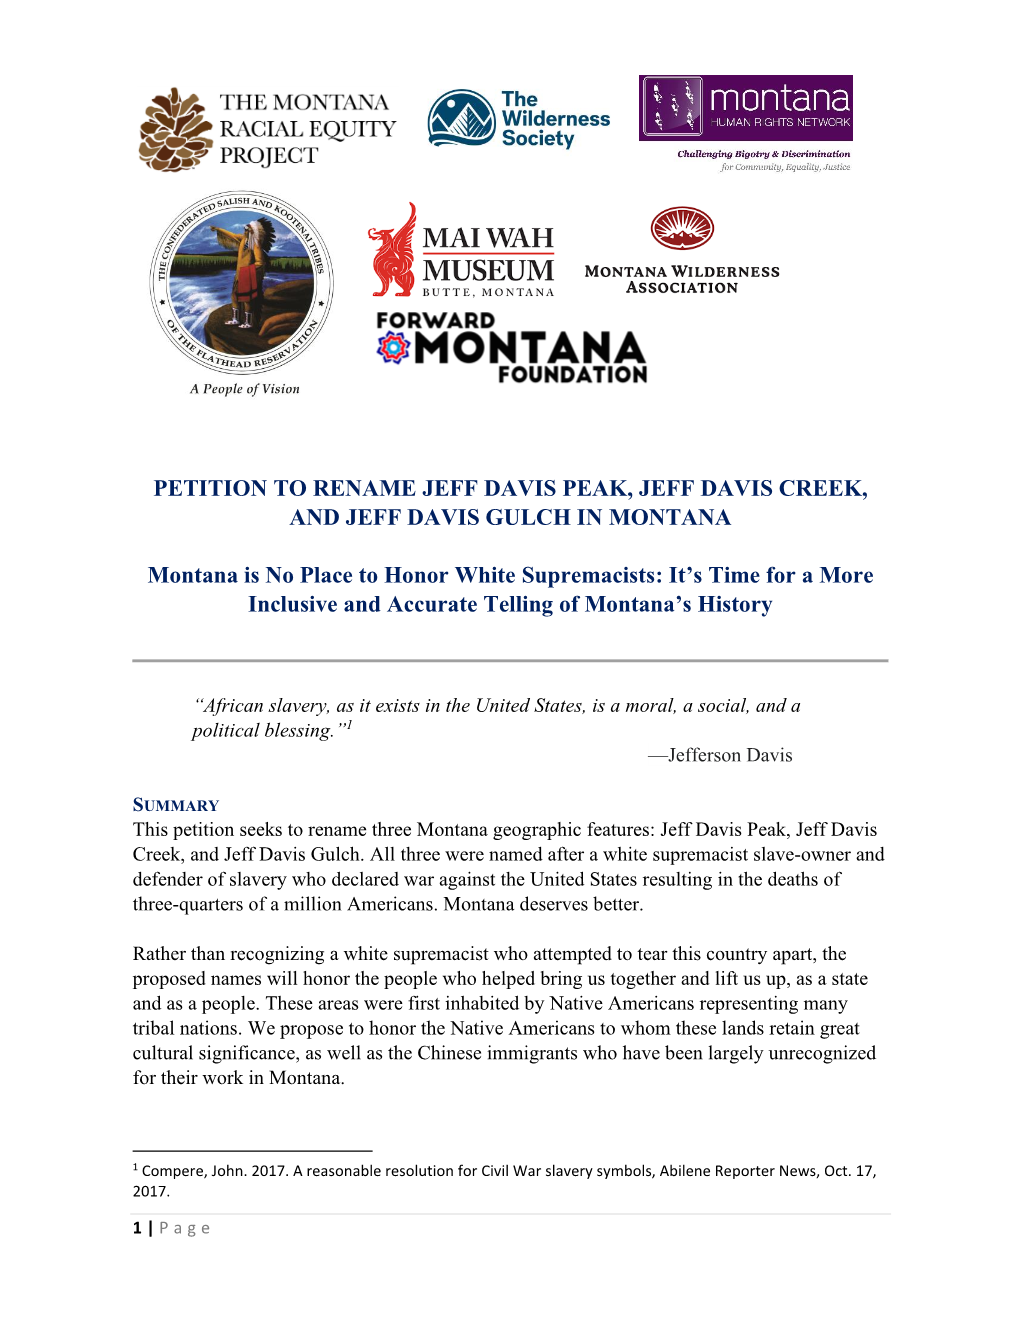 Petition to Rename Jeff Davis Peak, Jeff Davis Creek, and Jeff Davis Gulch in Montana